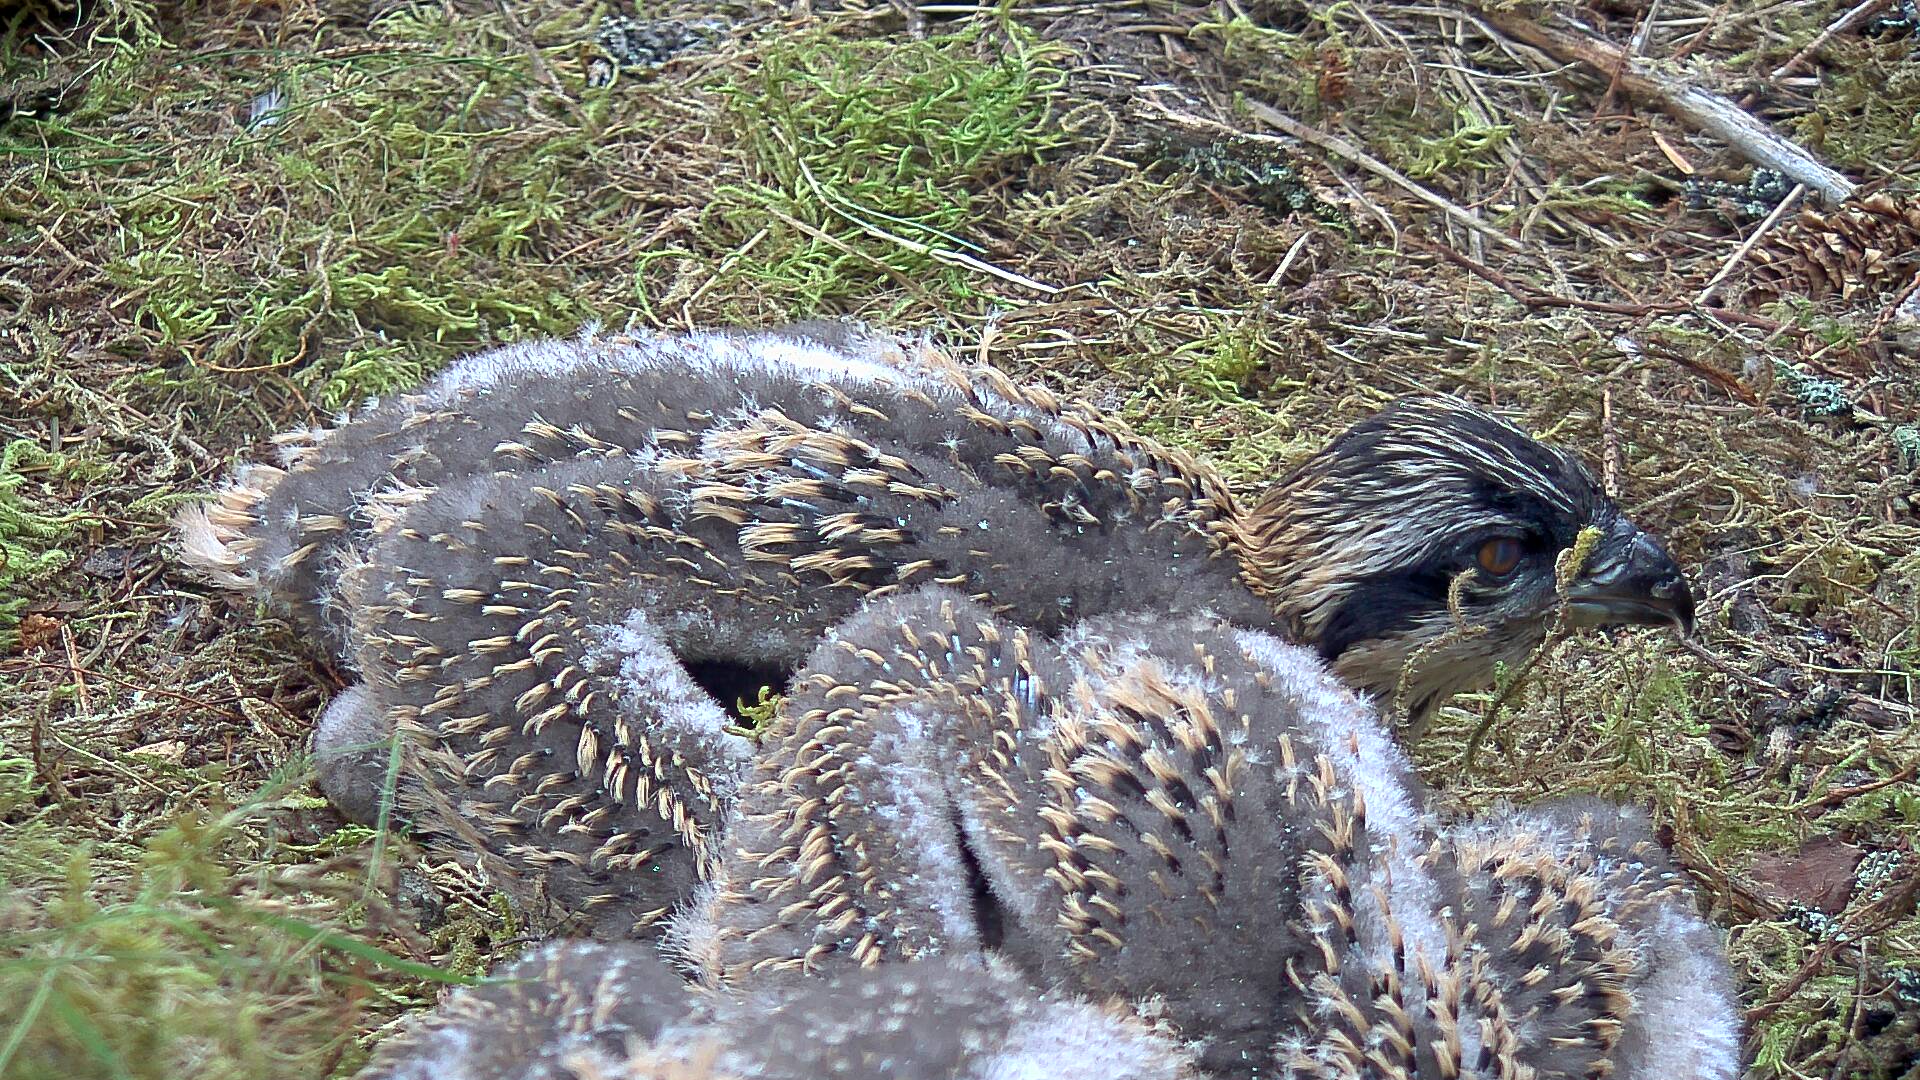 Close-up of osprey chicks